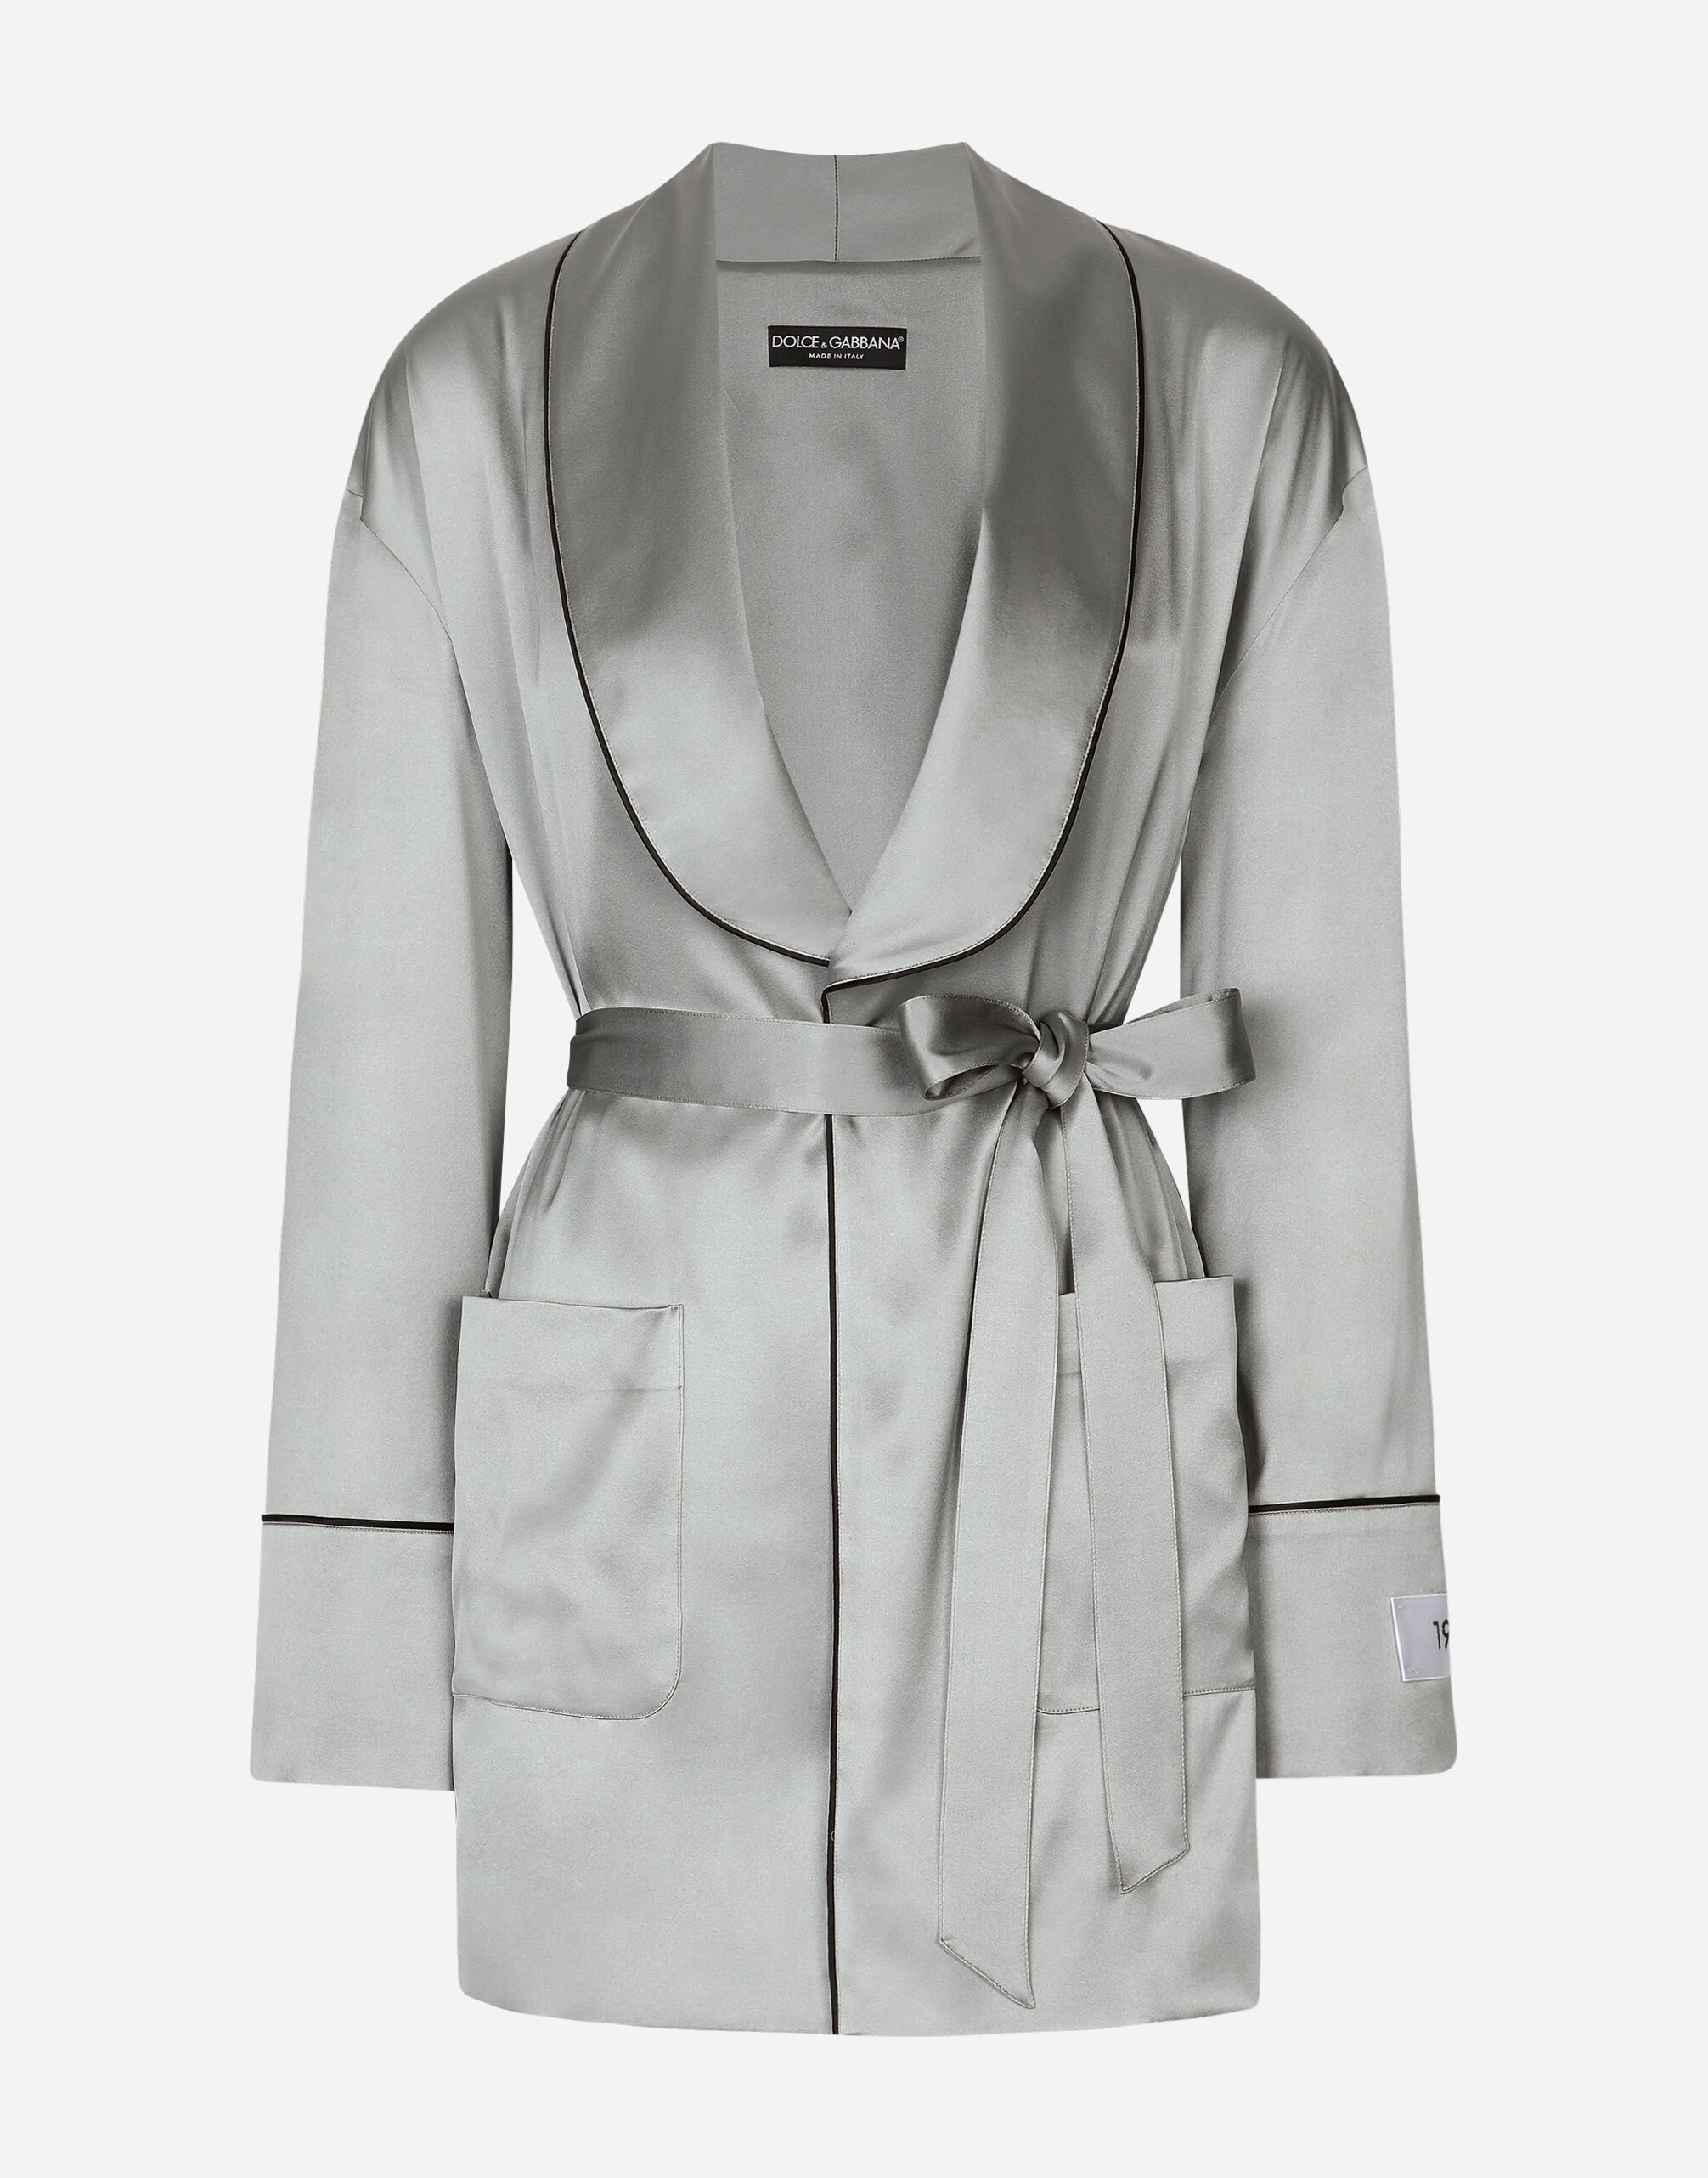 Dolce & Gabbana KIM DOLCE&GABBANA Camisa tipo pijama de raso con cinturón Blanco CK1563B5845